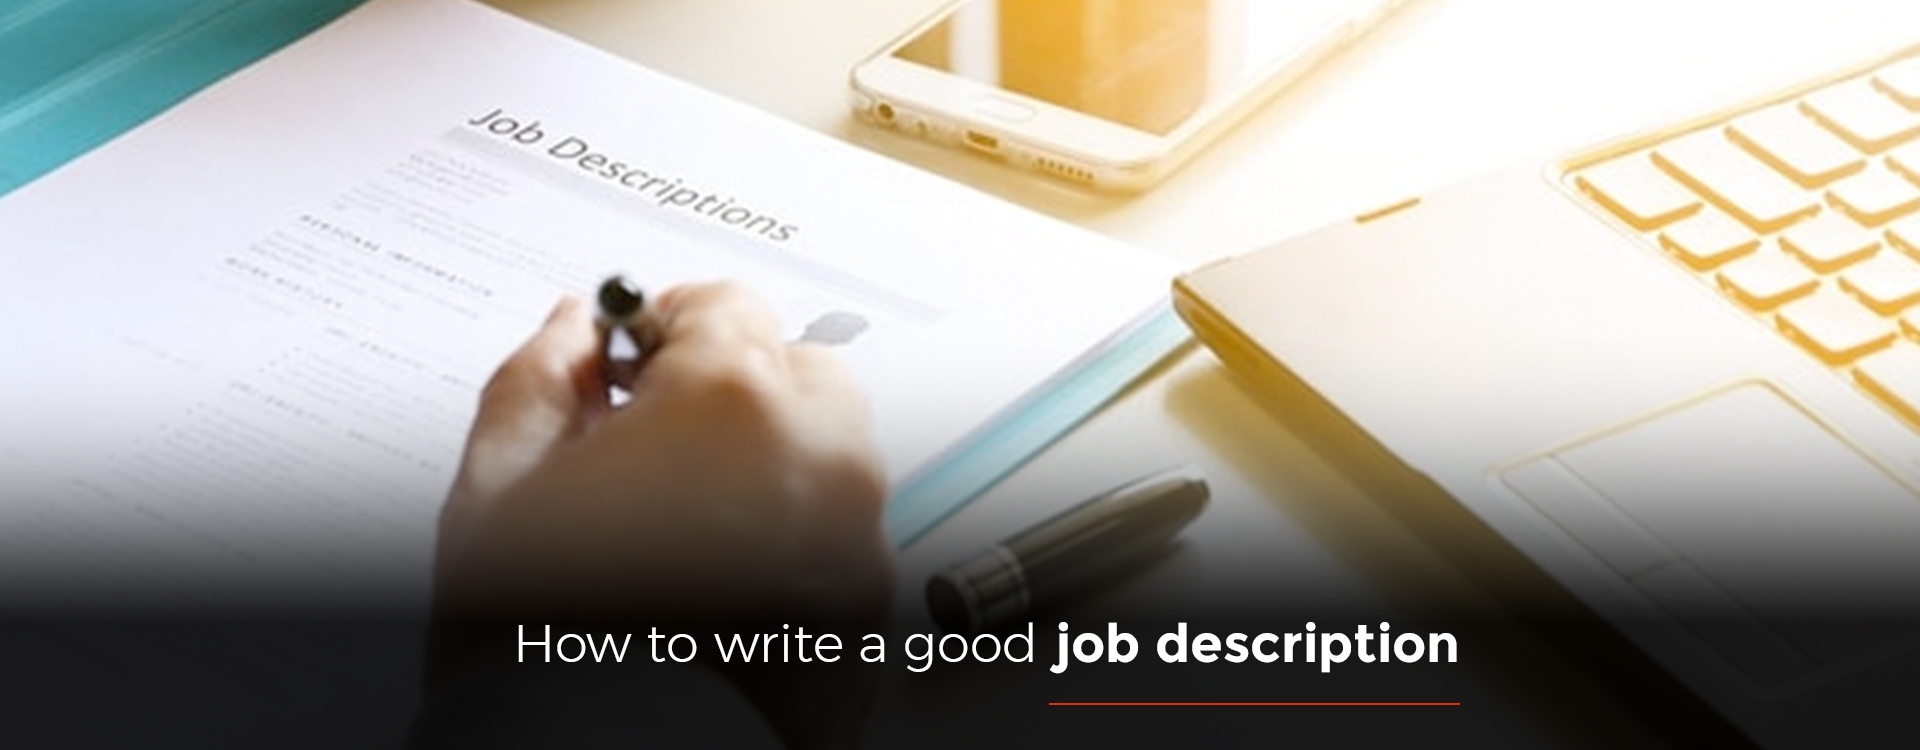 Tips-for-Writing-Better-Job-Descriptions